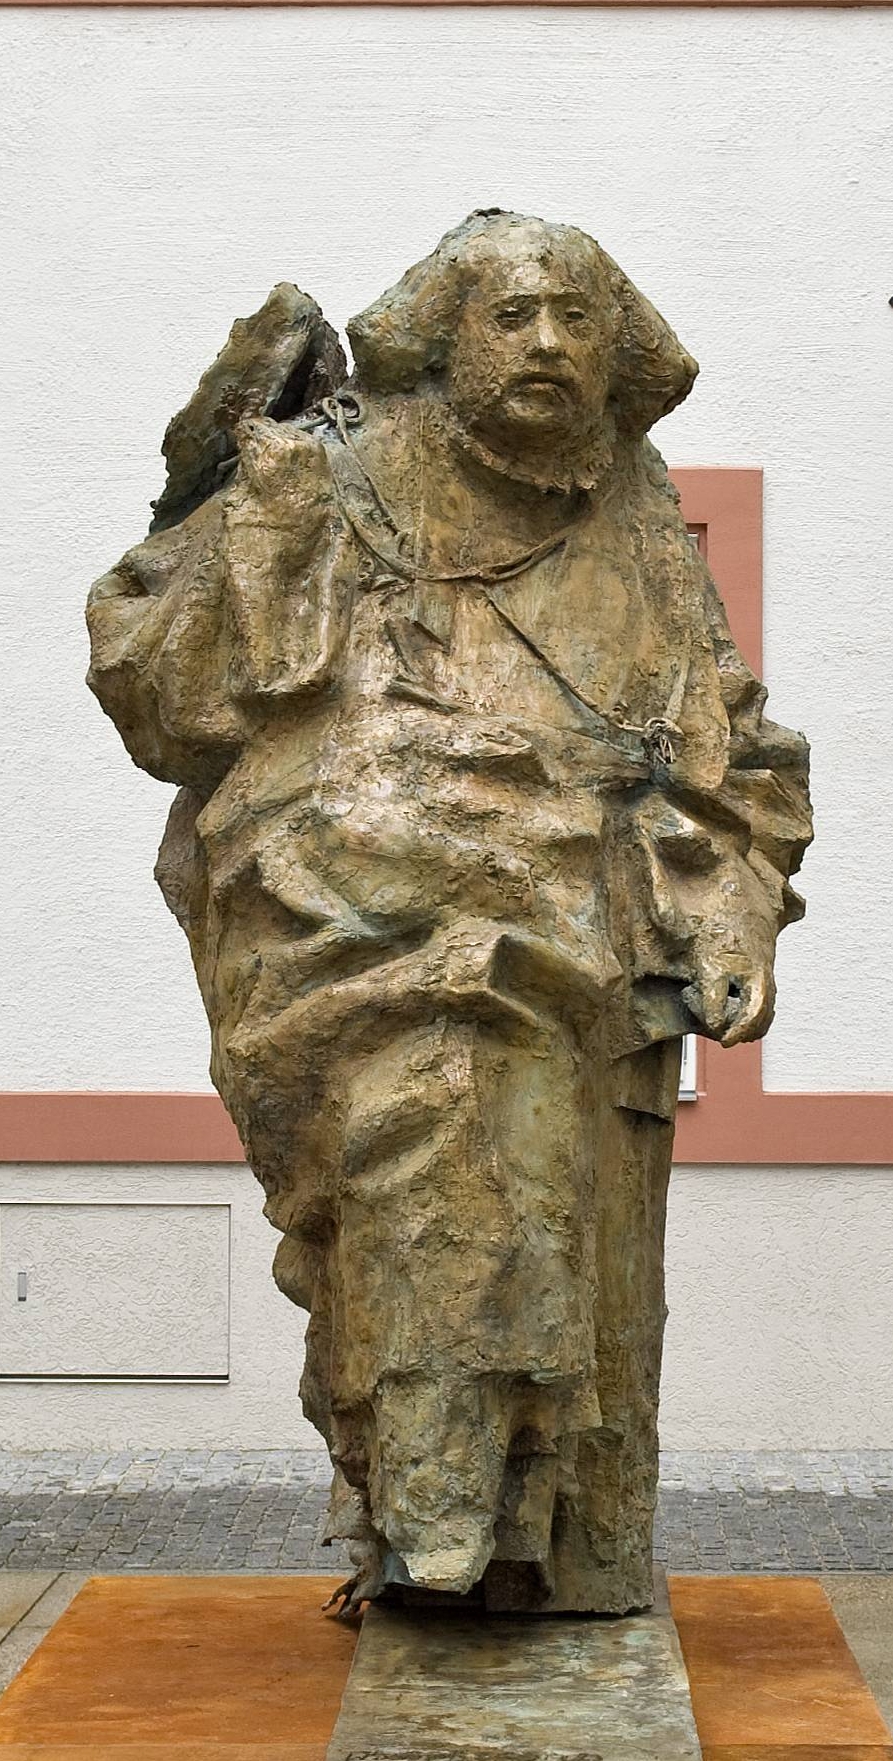 Theophrastus Bombastus von Hohenheim, called Paracelsus, Josef Zenzmaier, 2009, bronze, inv. no. 1407-2009